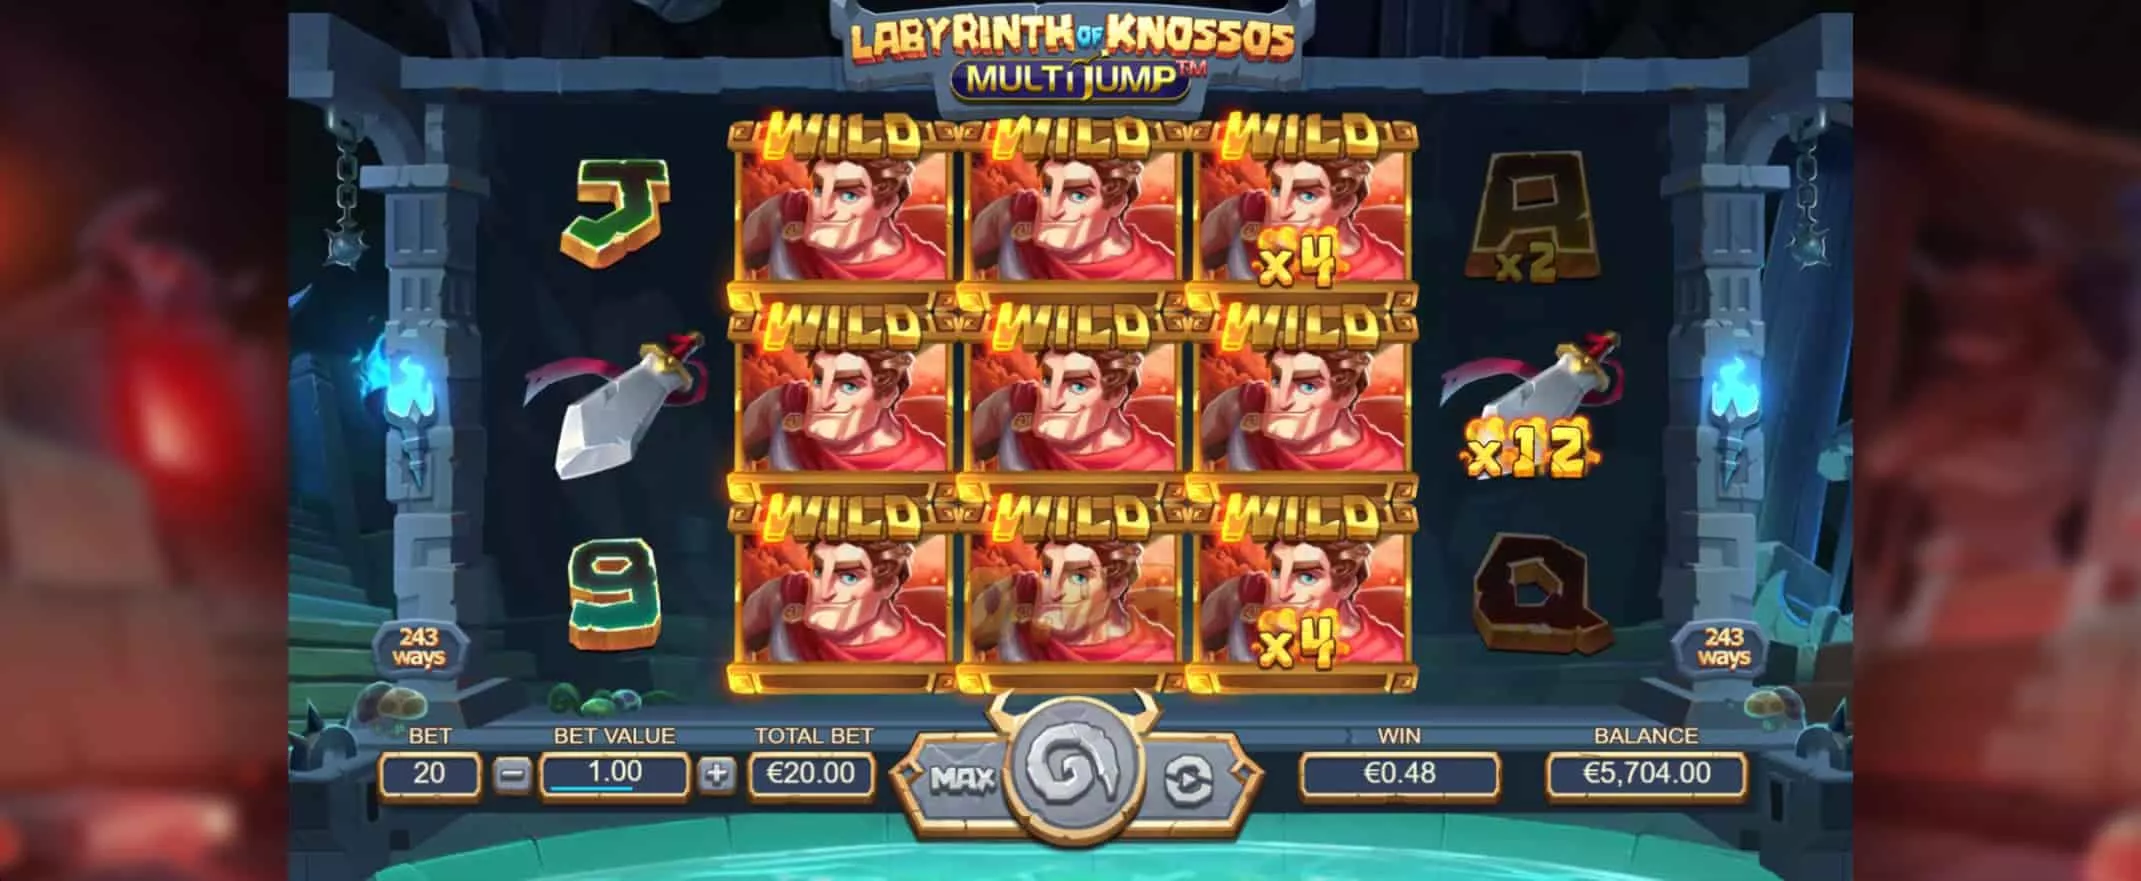 Labyrinth of Knossos Multijump screenshot of the reels